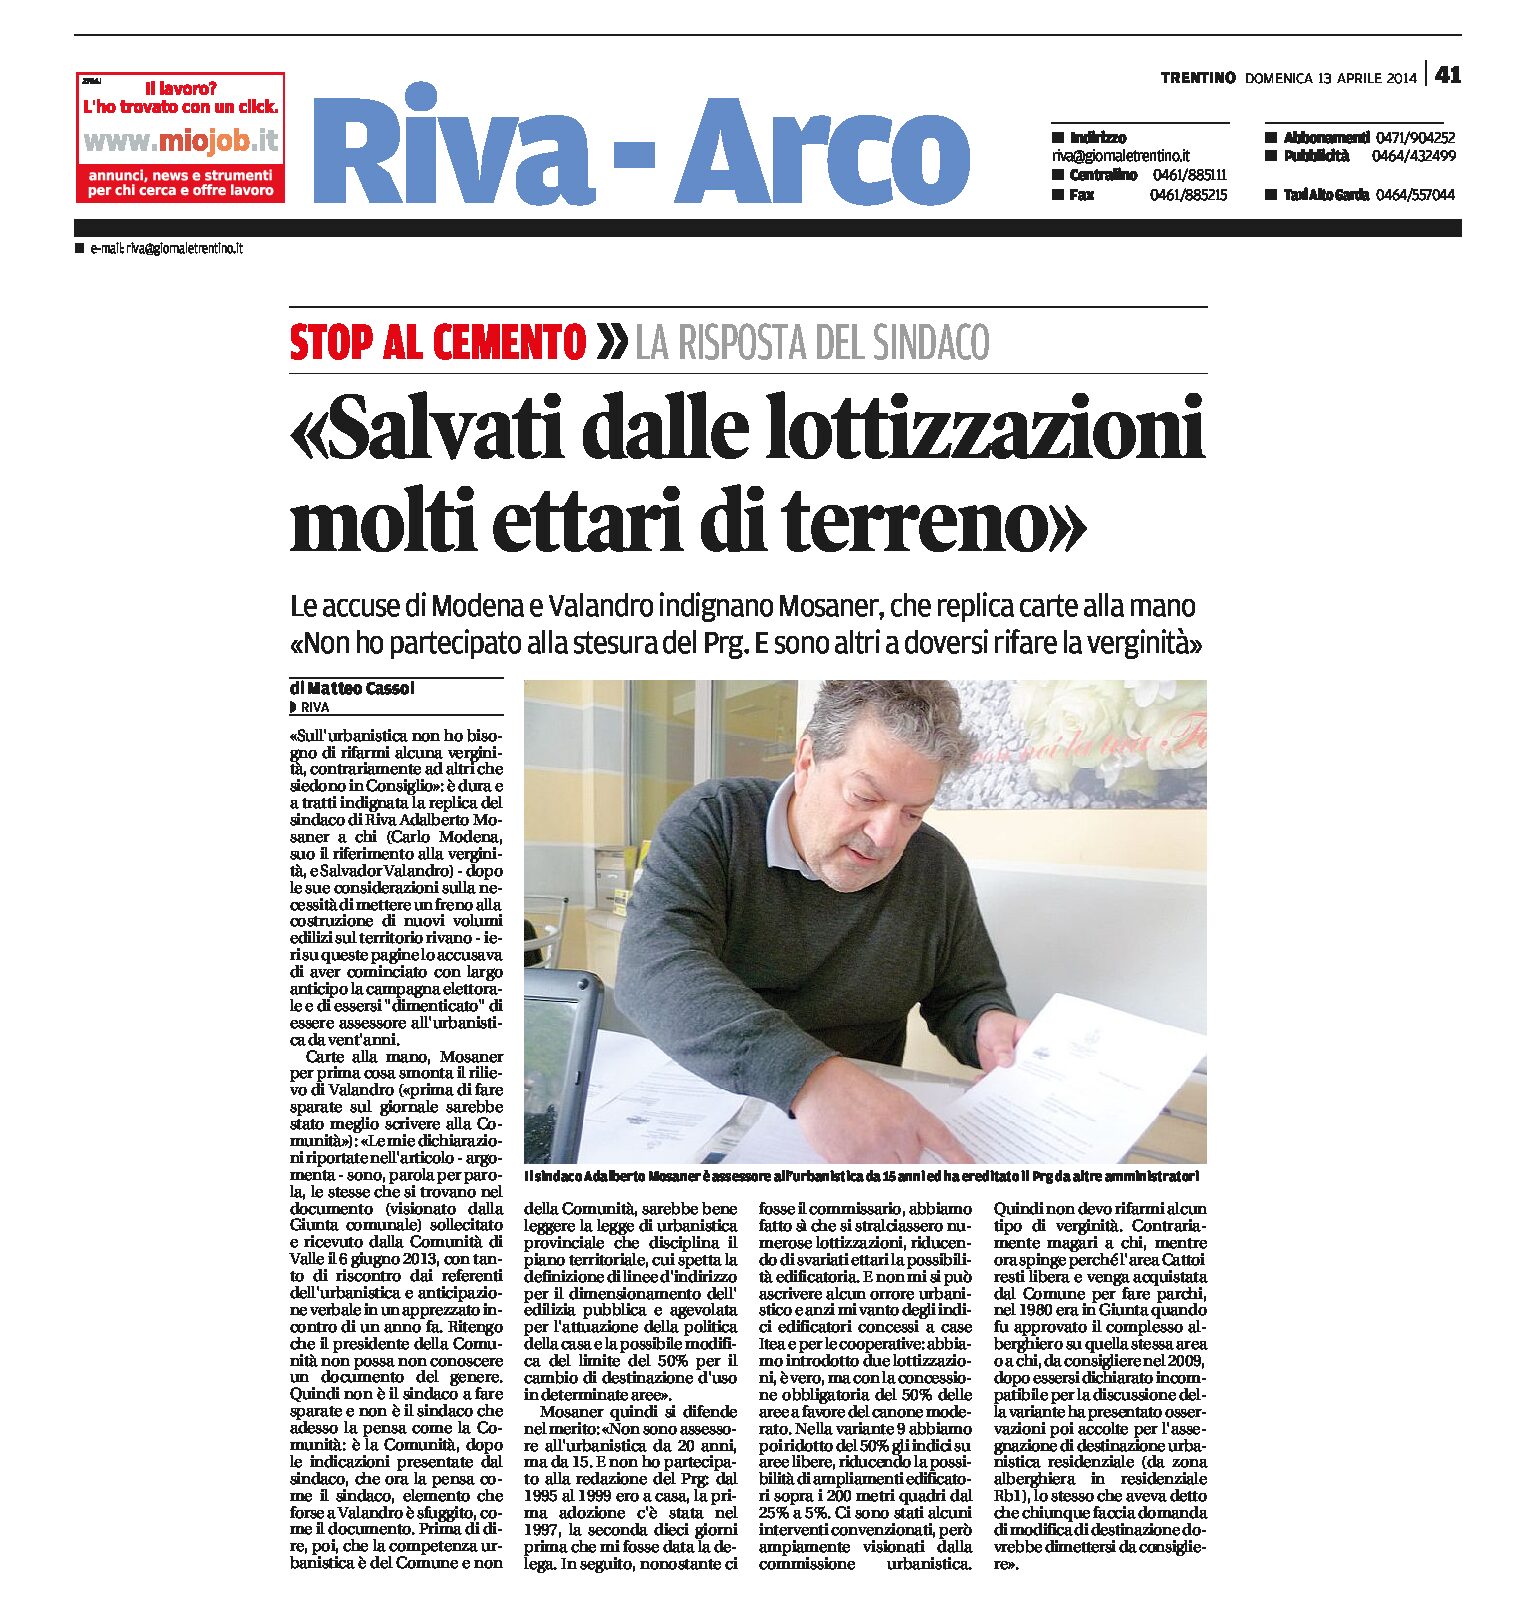 Riva: stop al cemento, la risposta del sindaco Mosaner